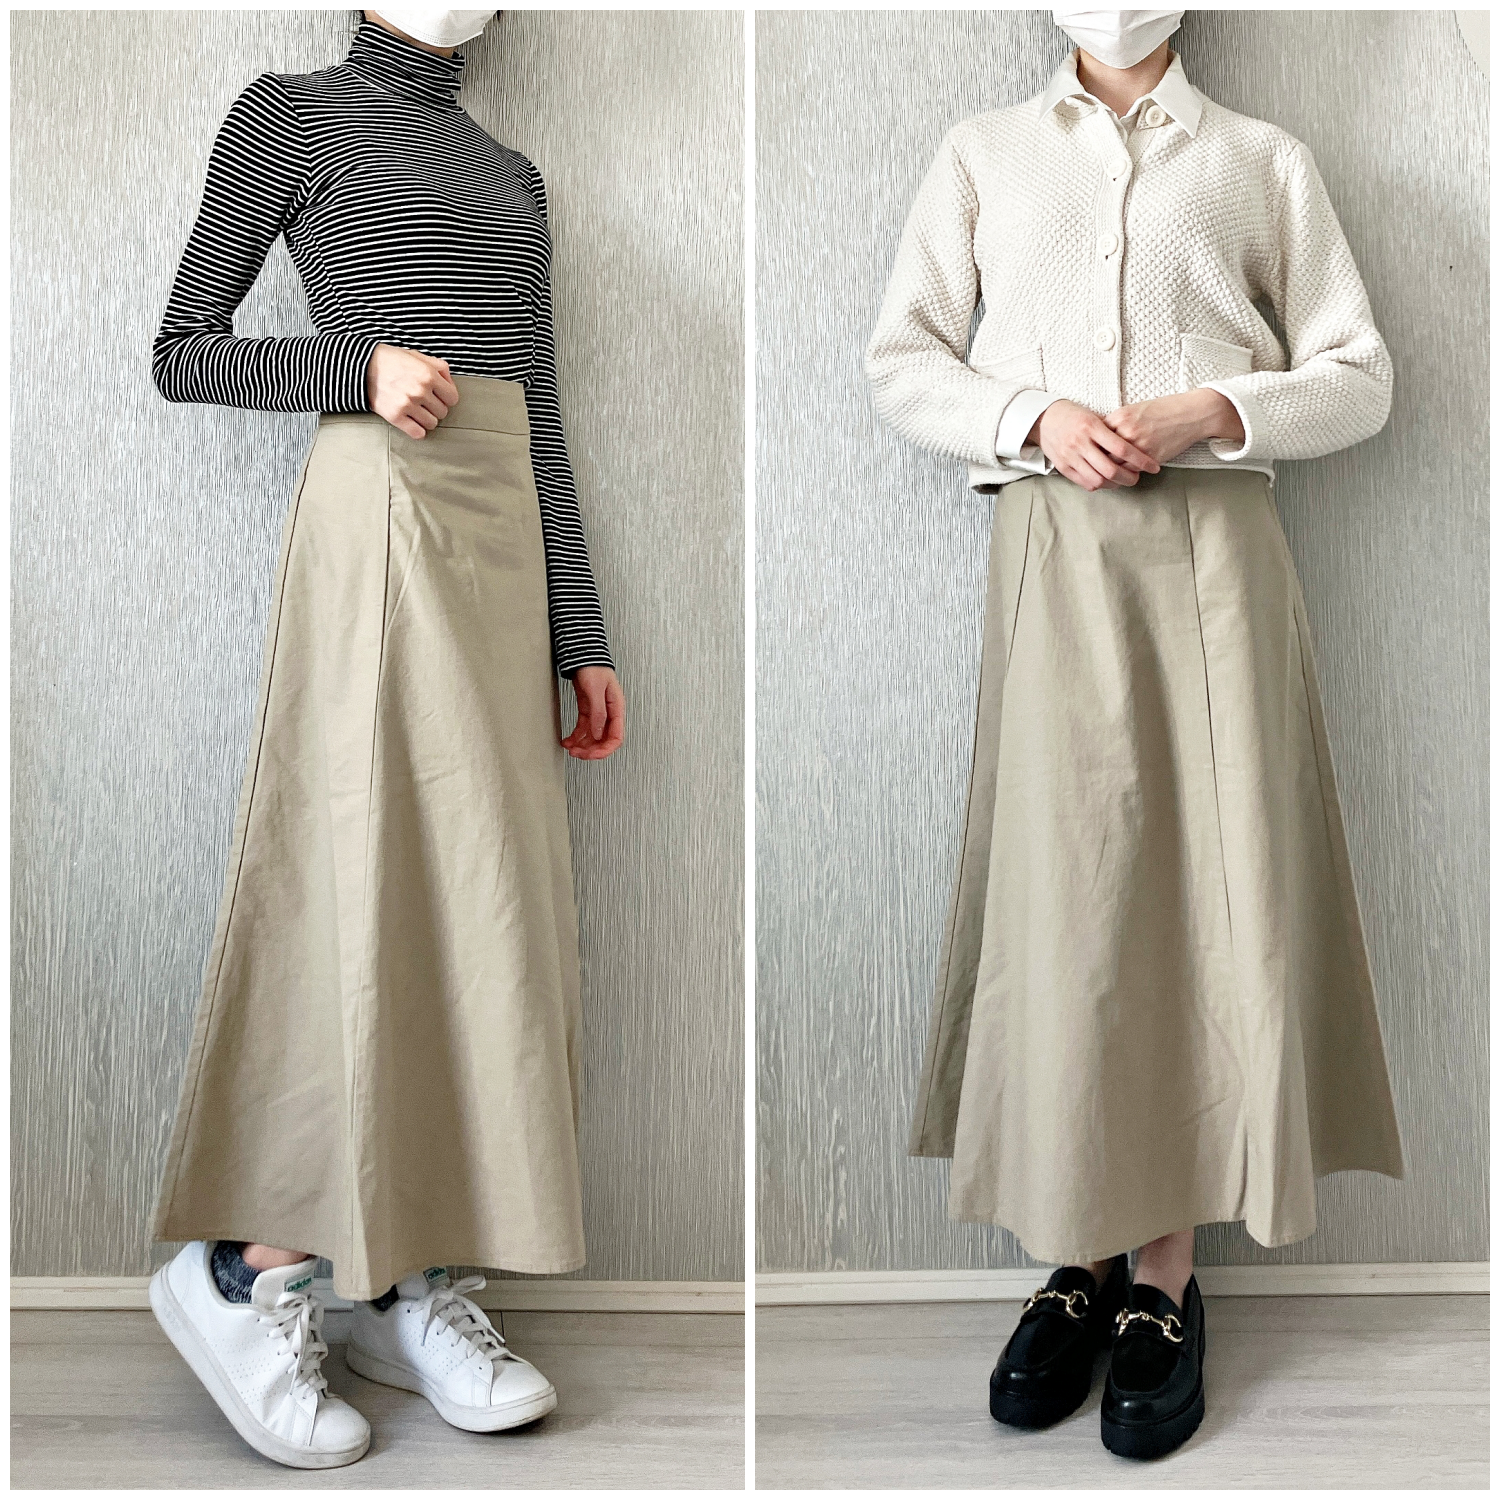 GU（ジーユー）のおすすめスカート「リネンブレンドフレアロングスカート（丈標準85.0～92.0cm）」